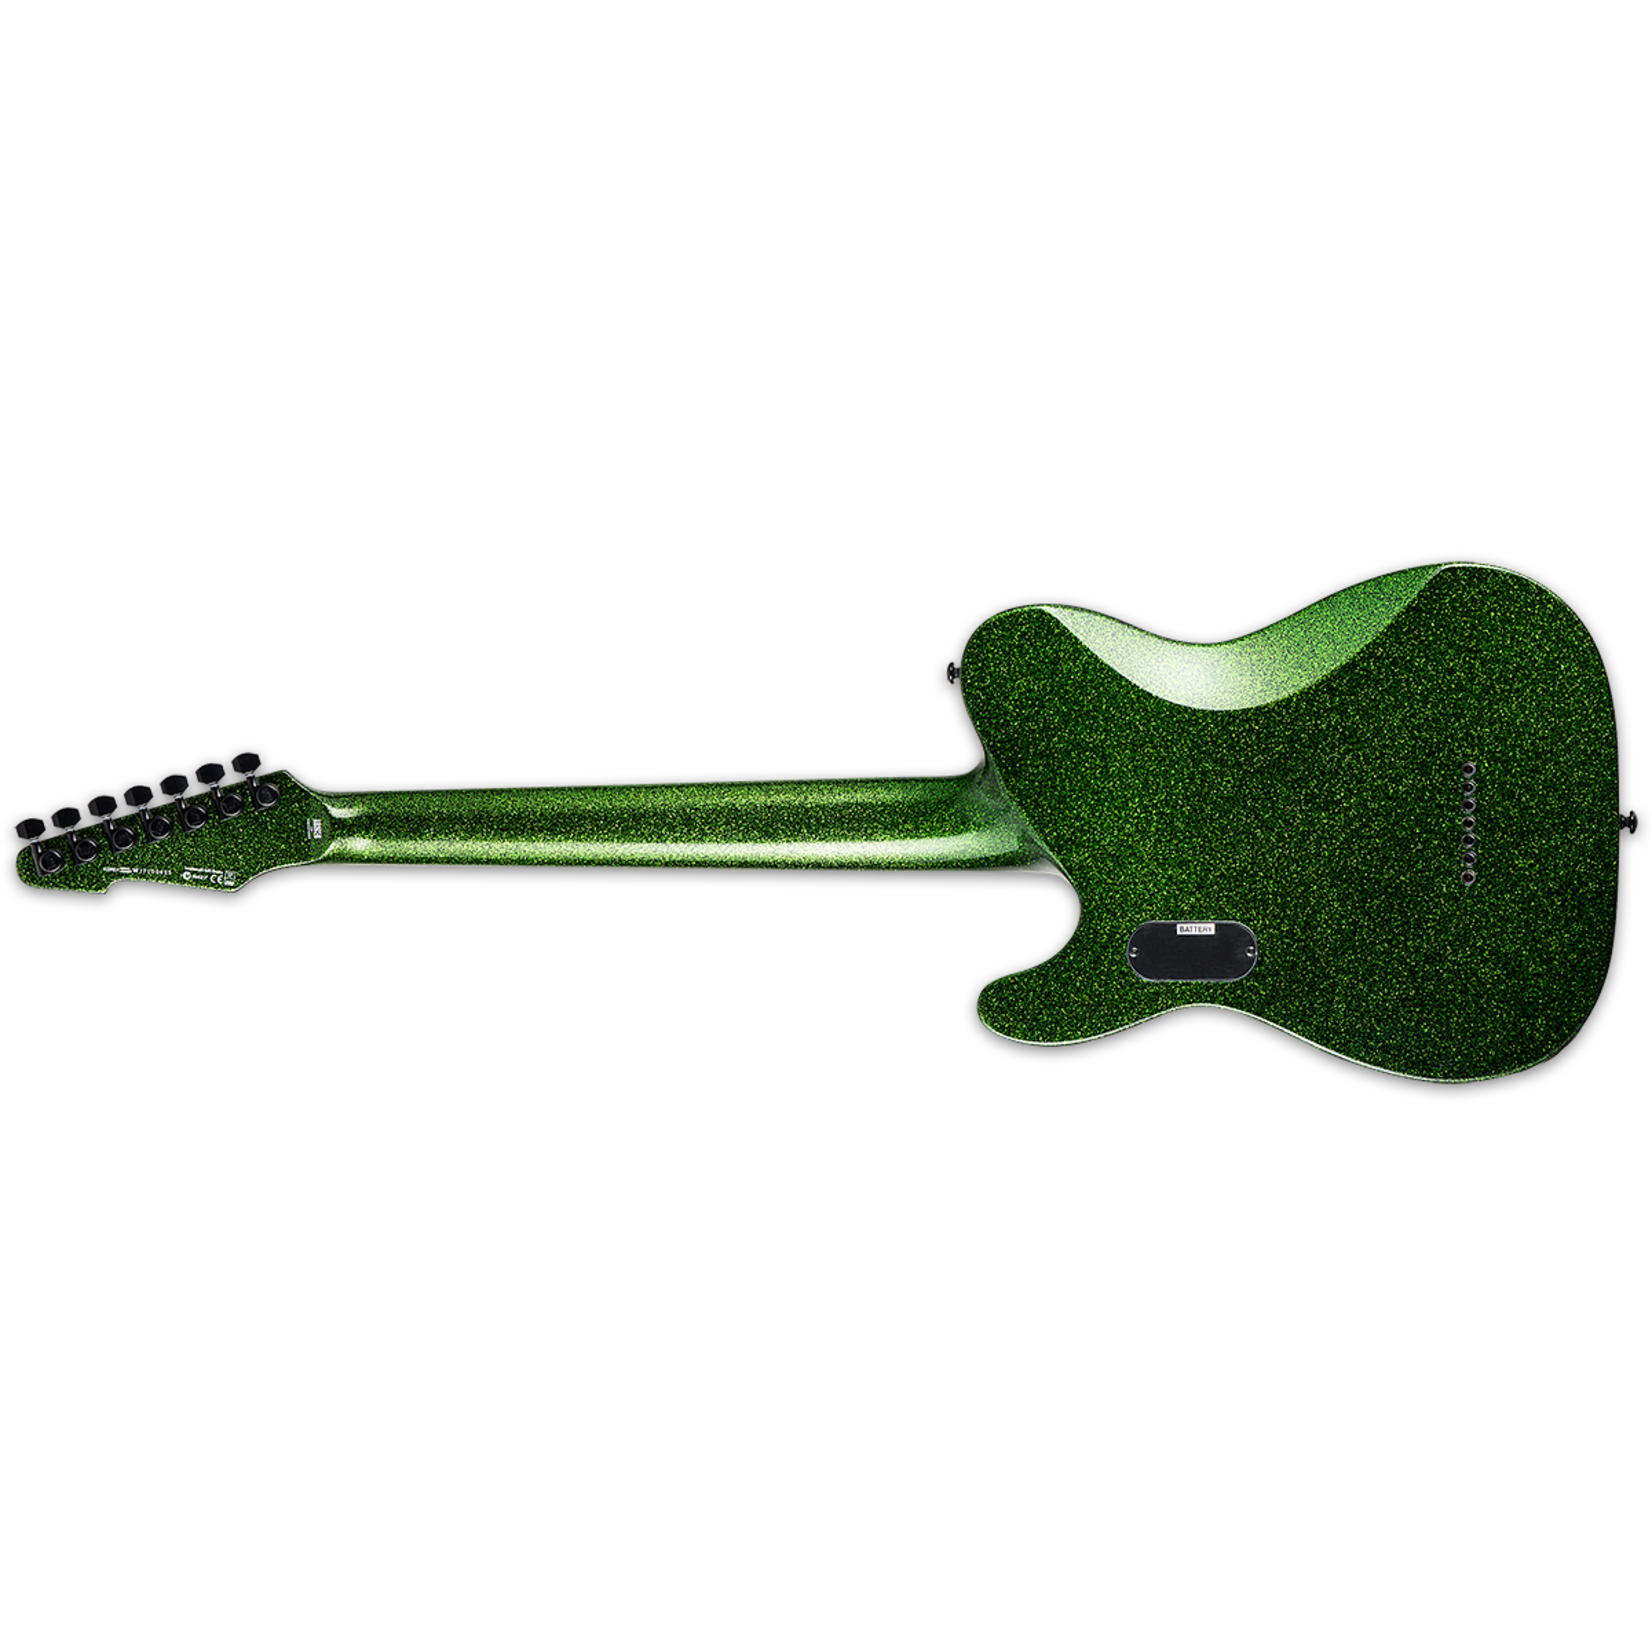 ESP LTD SCT-607B Stephen Carpenter 7-String Baritone Electric Guitar W/Case - Green Sparkle